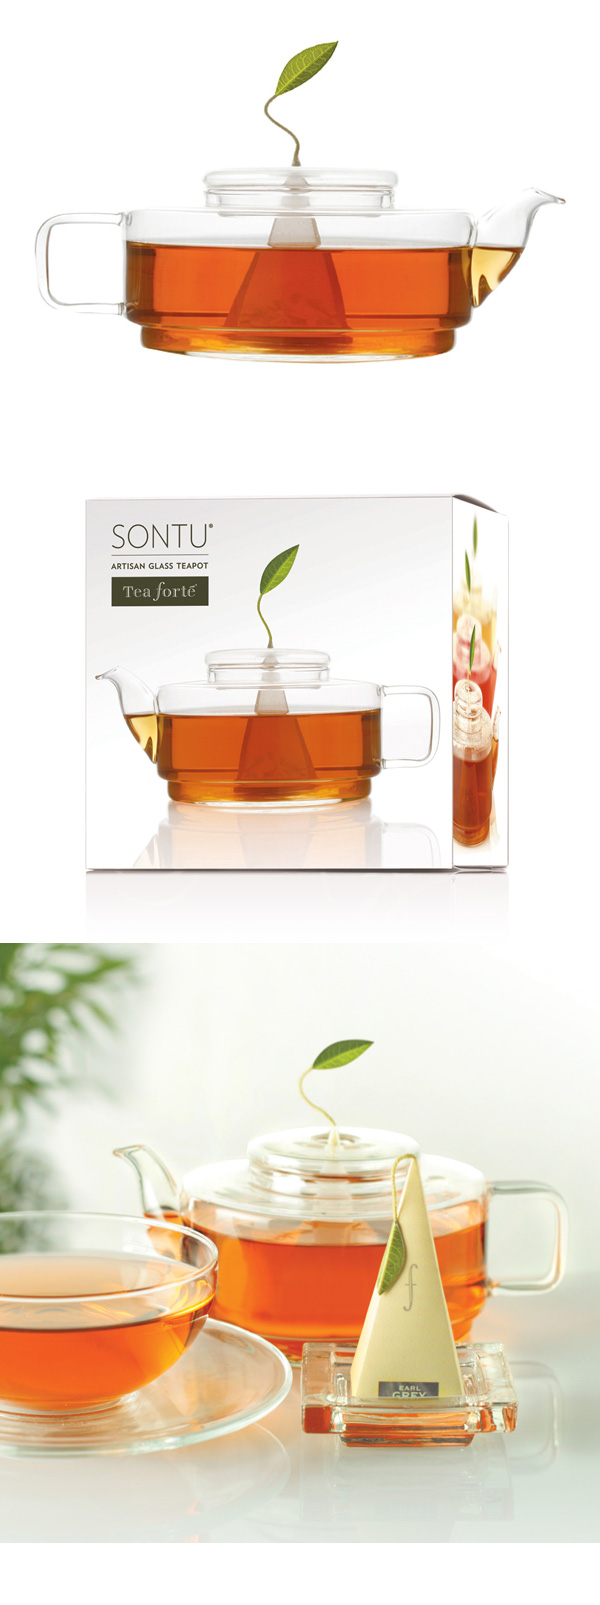 Tea Forte Sontu玻璃茶壺